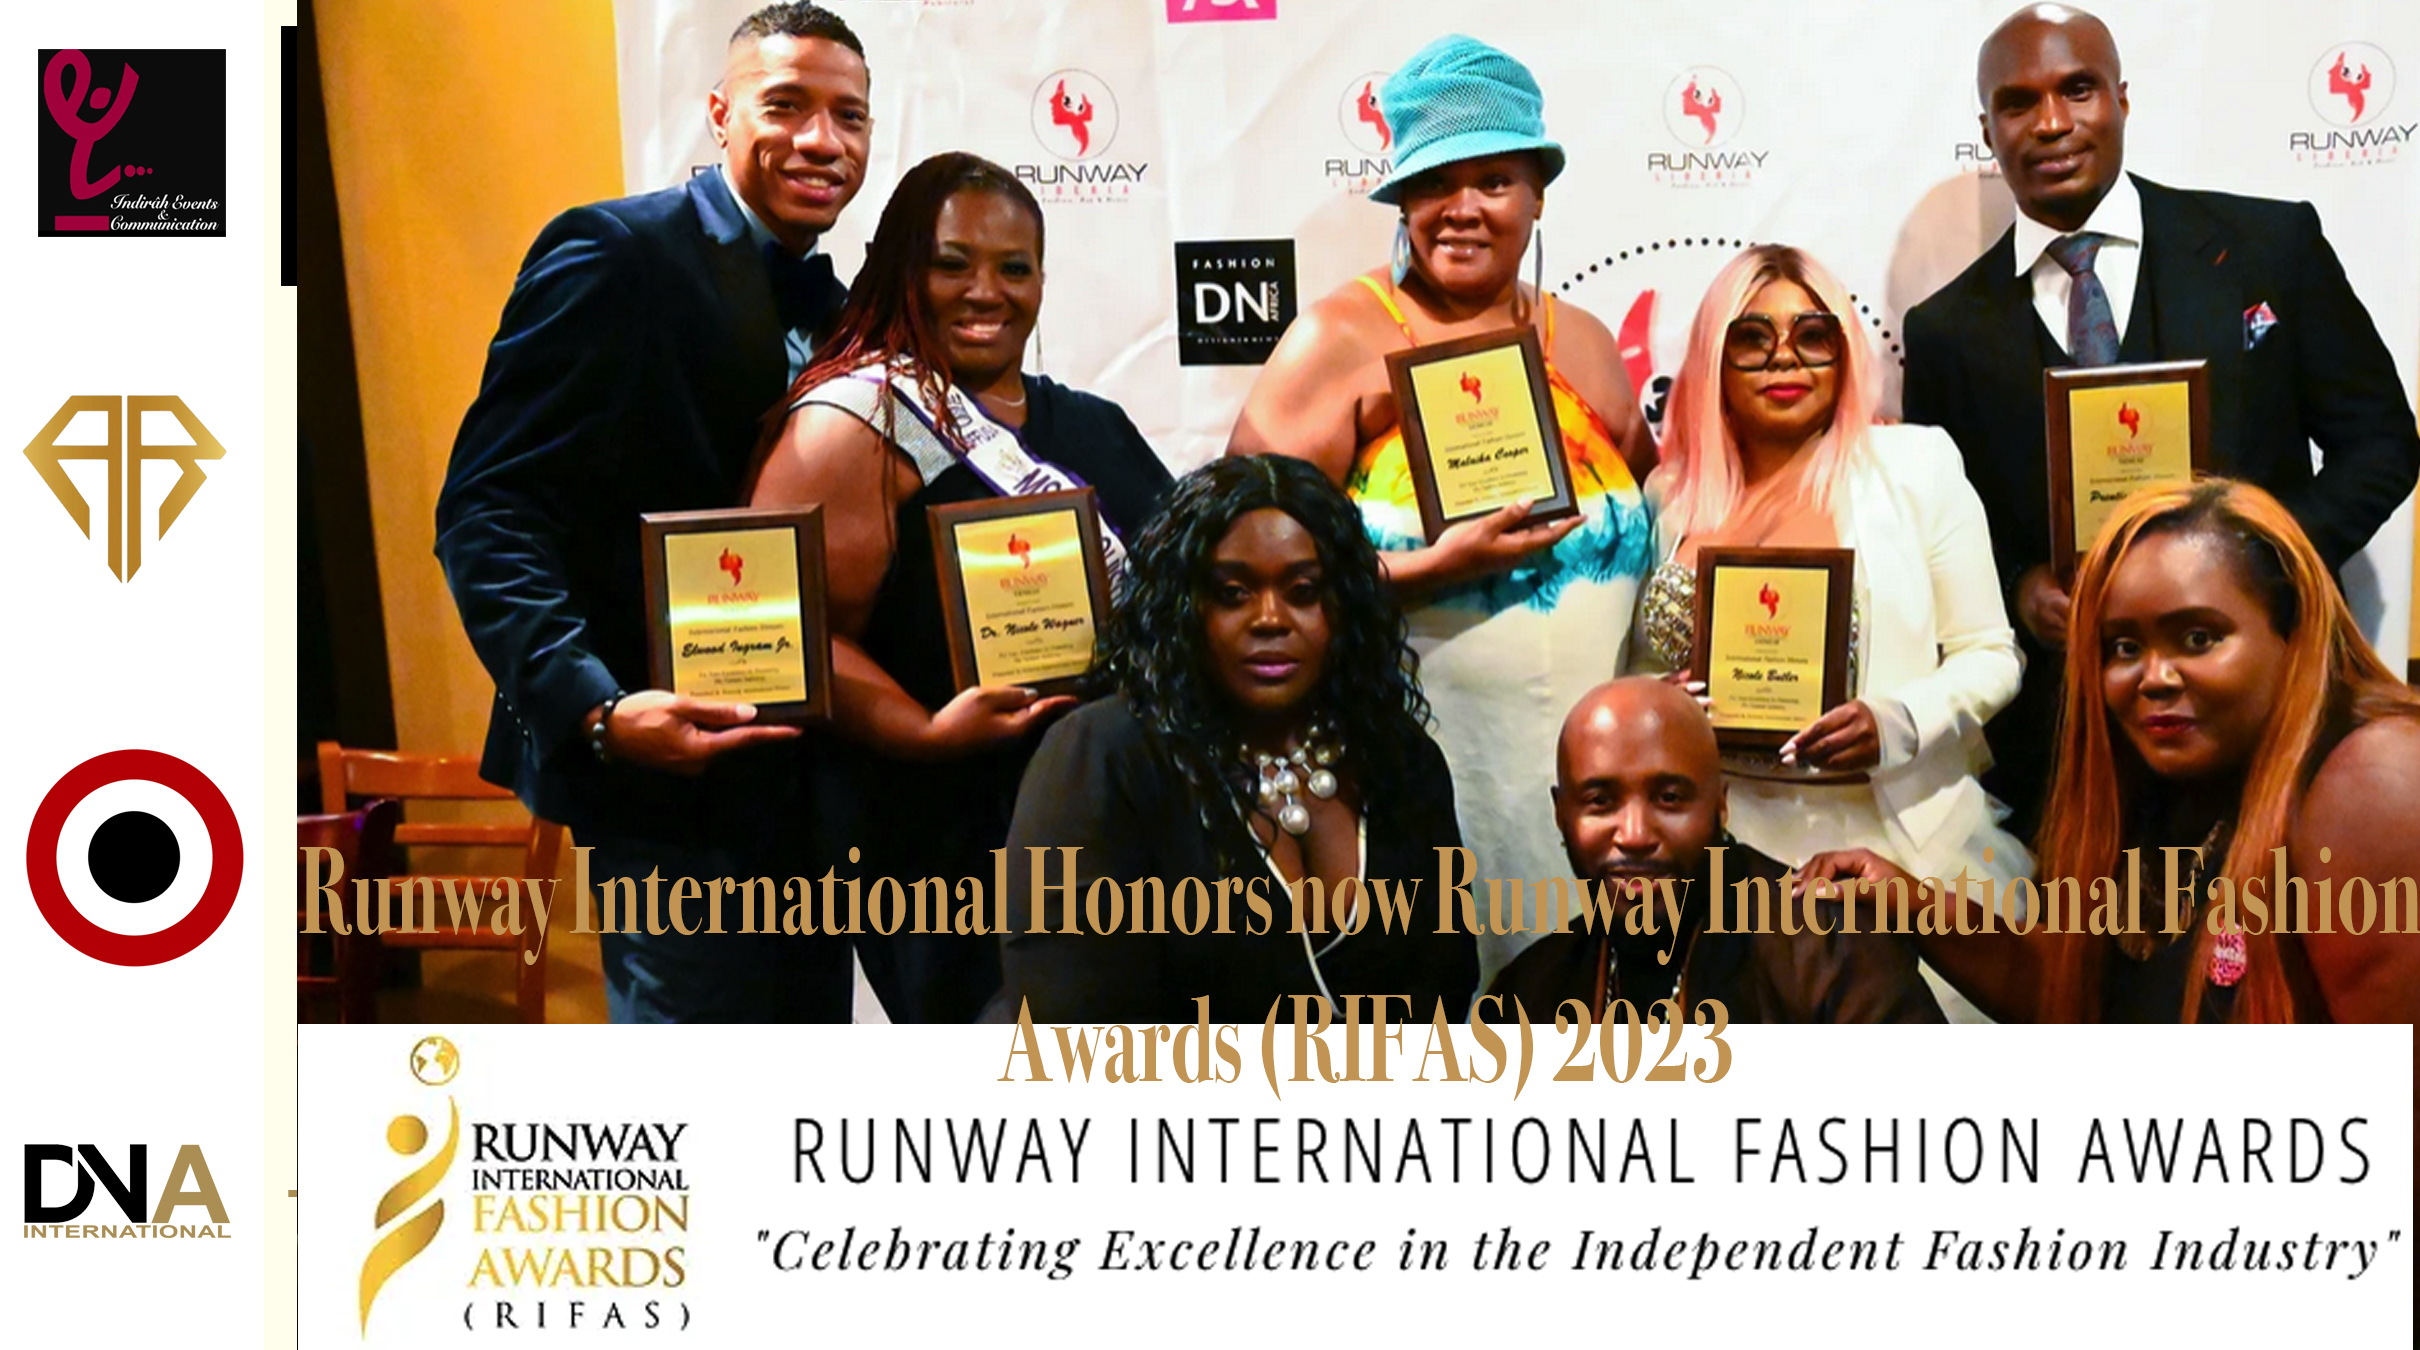 AFRICA-VOGUE-COVER-Runway-International-Honors-now-Runway-International-Fashion-Awards-RIFAS-2023-DN-AFRICA-Media-Partner